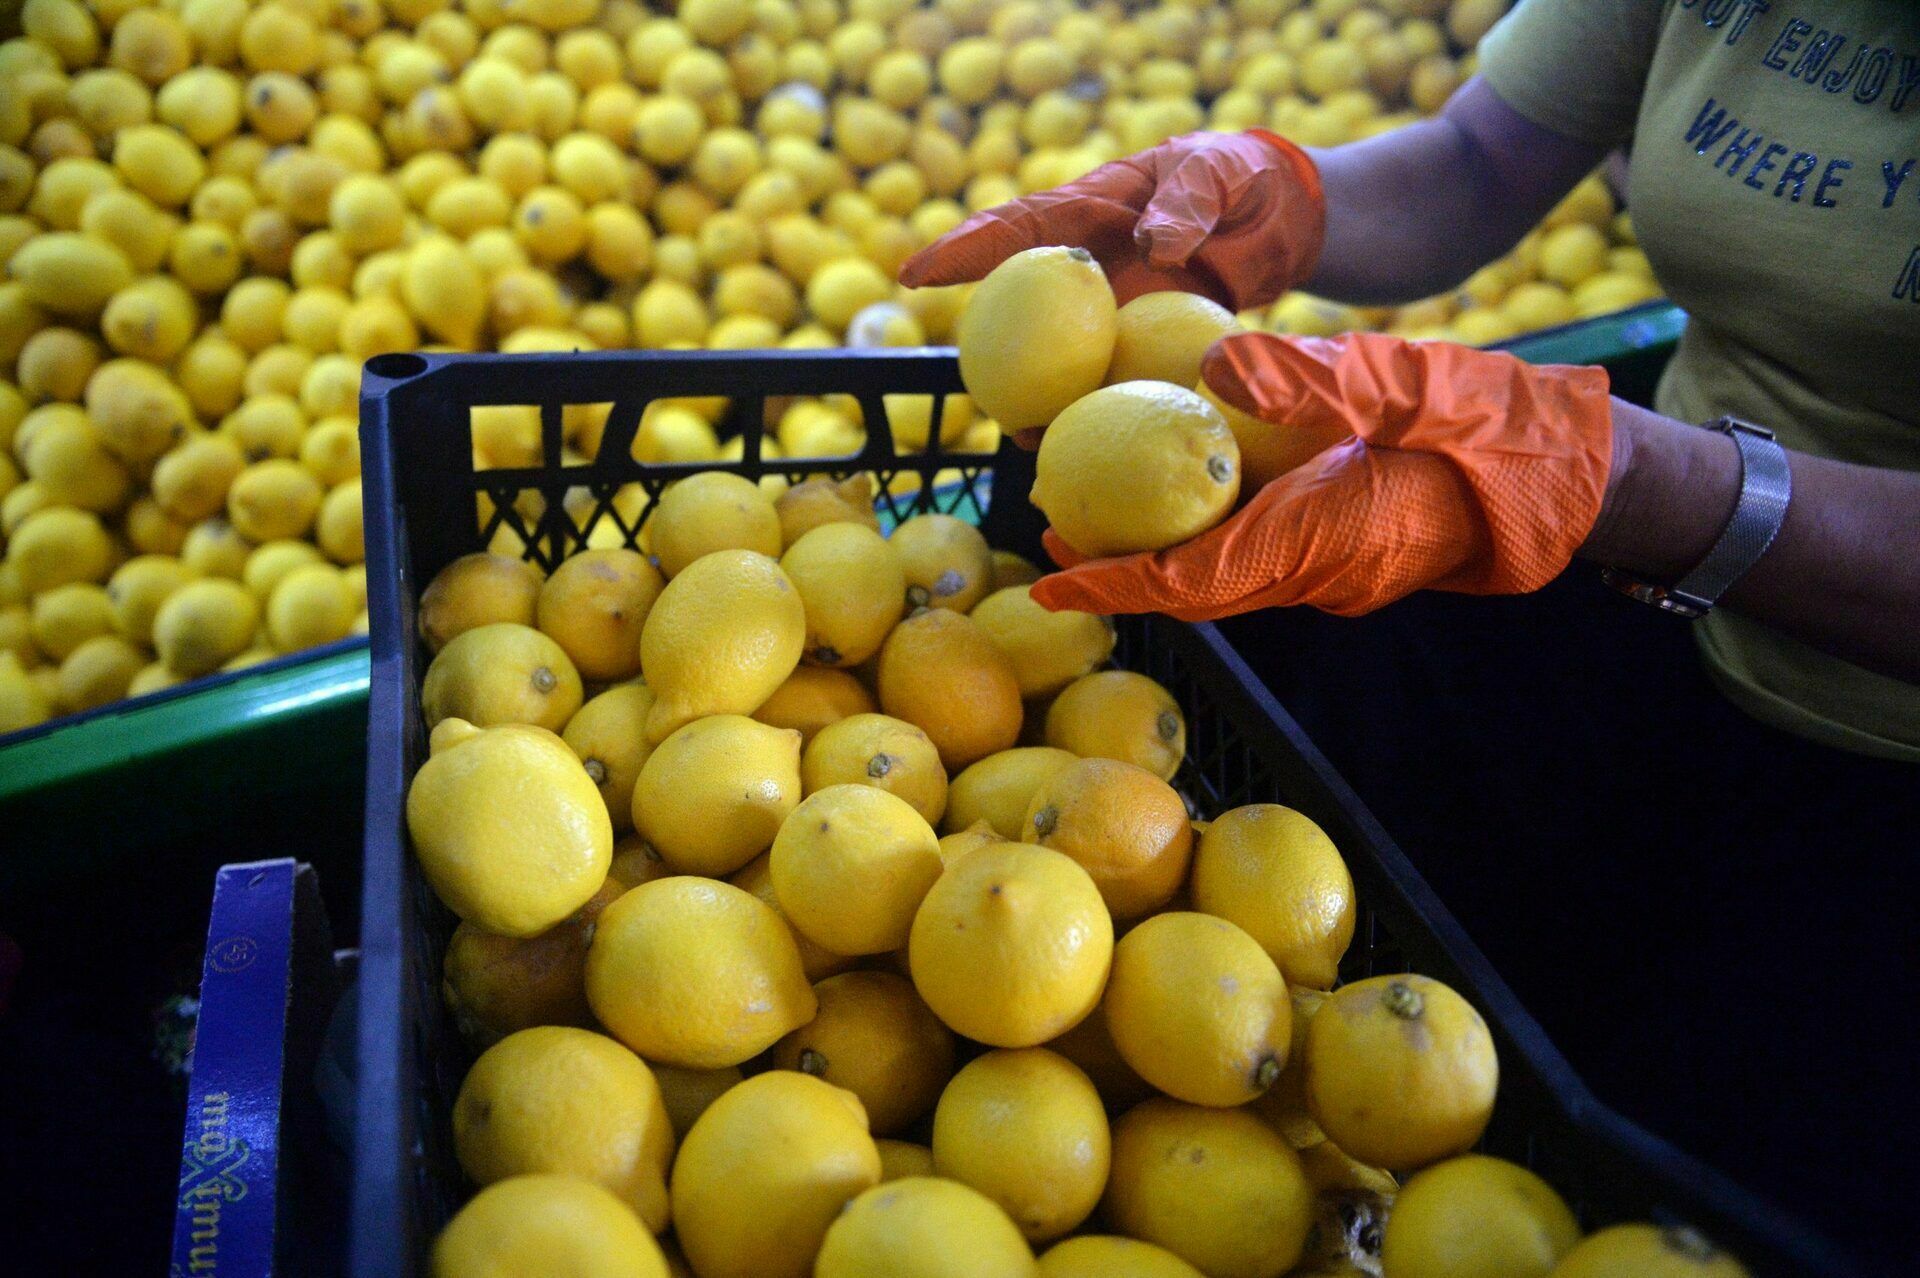 Rospotrebnadzor has banned the import of Turkish lemons